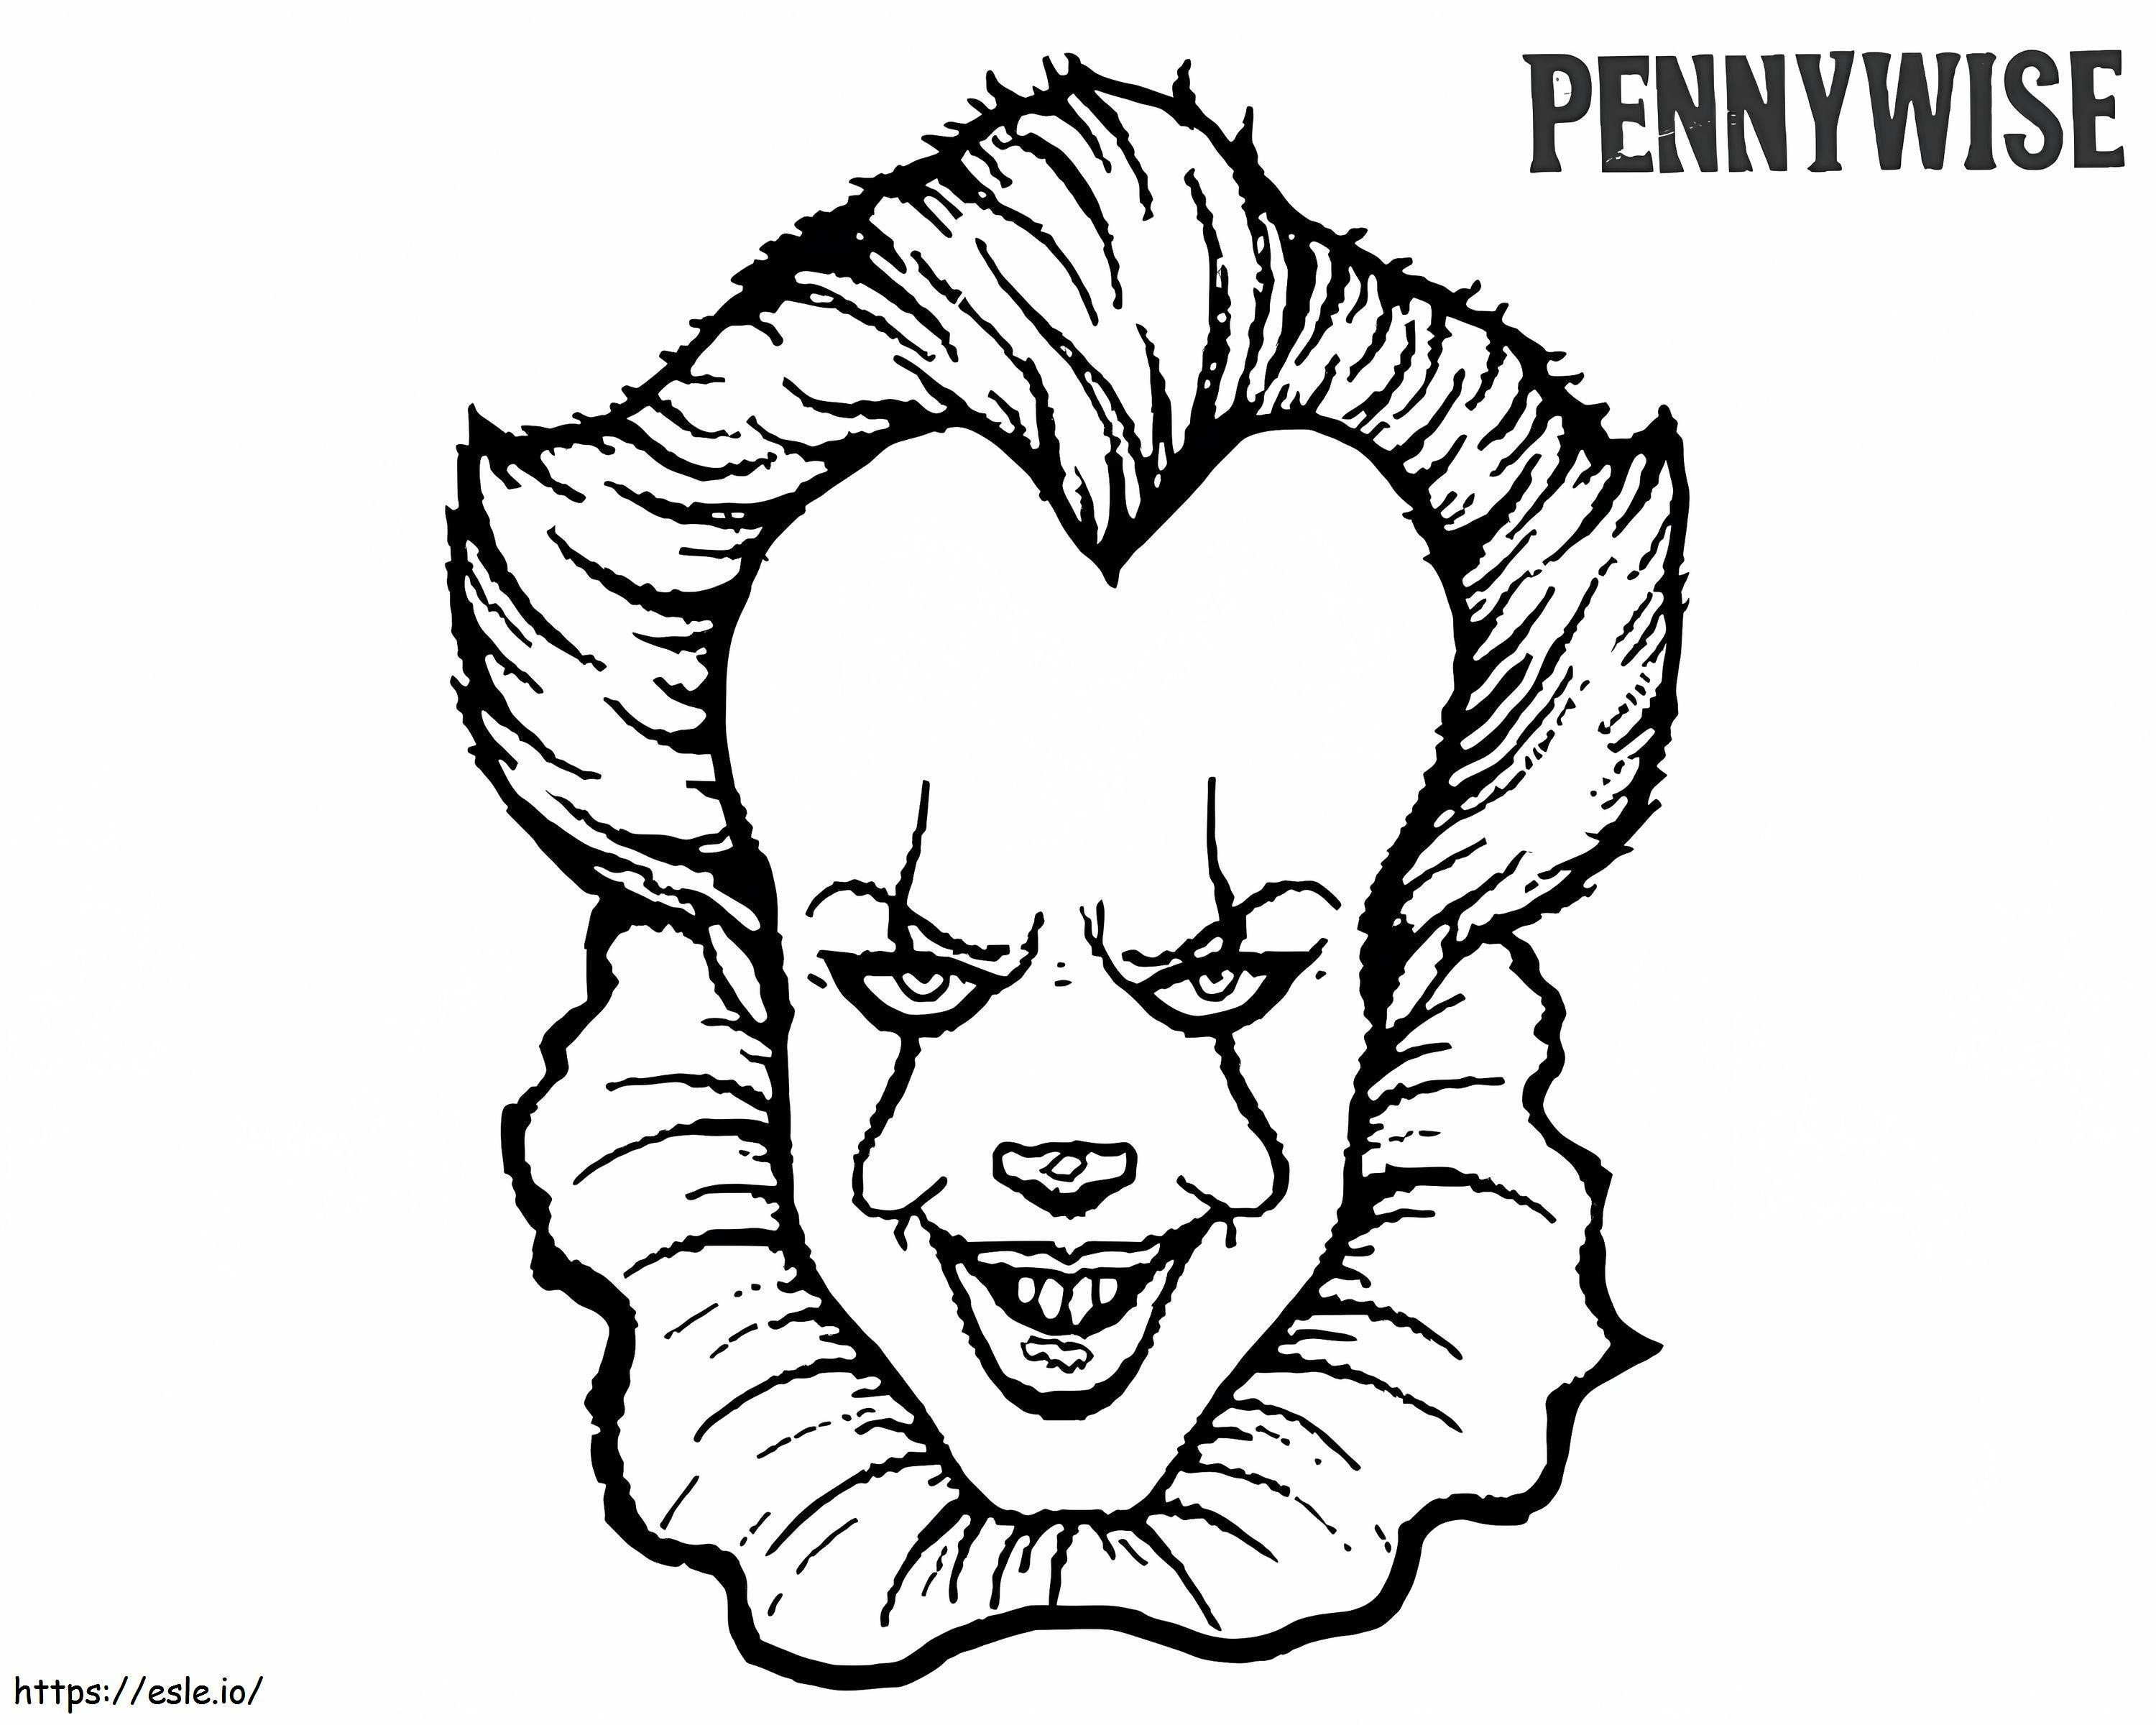 Cara de Pennywise para colorir